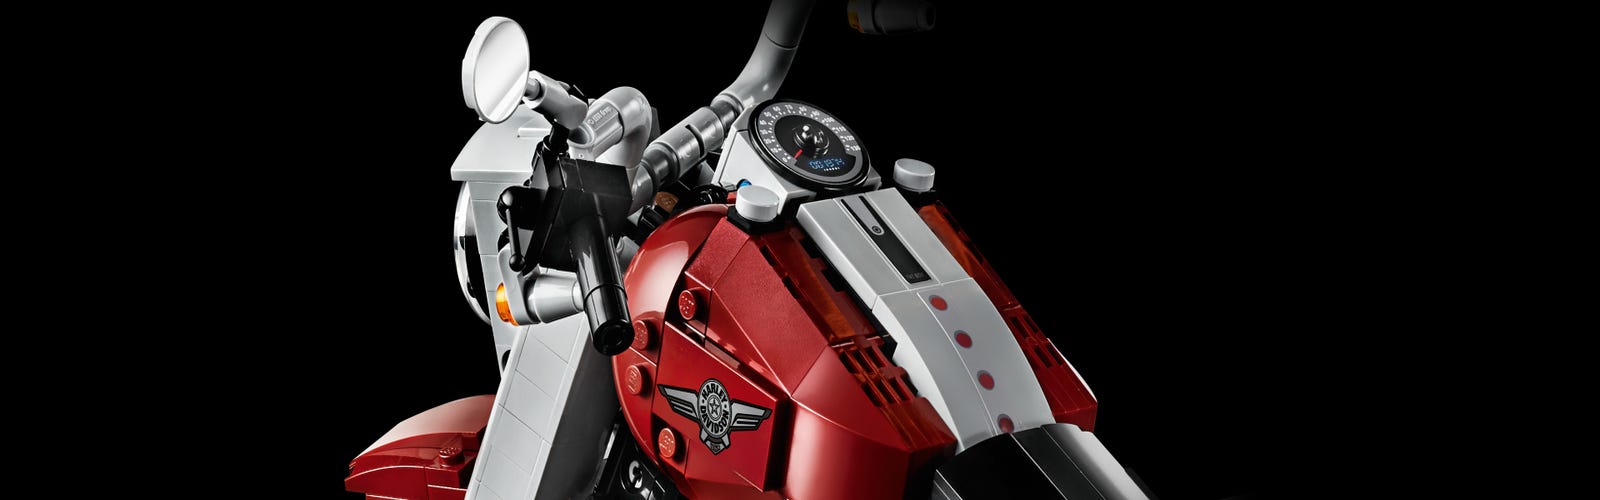 LEGO Harley-Davidson Fat Boy motocycle rolls onto the scene - 9to5Toys